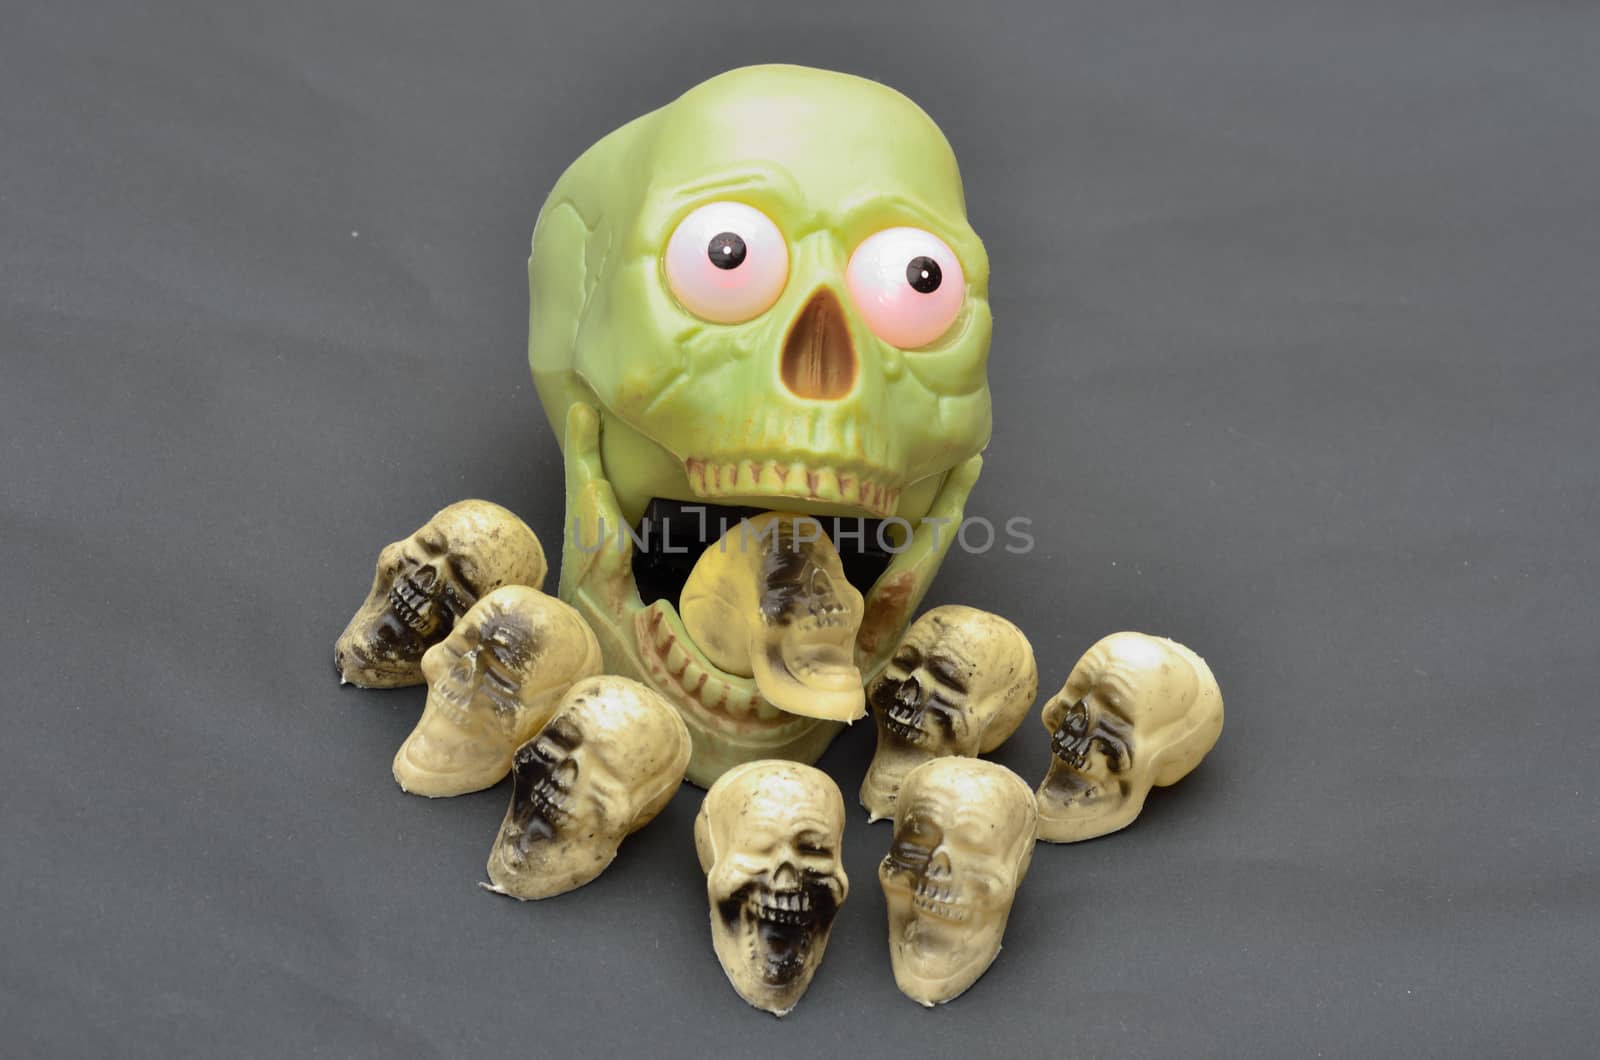 Skull swallowing skulls by pauws99